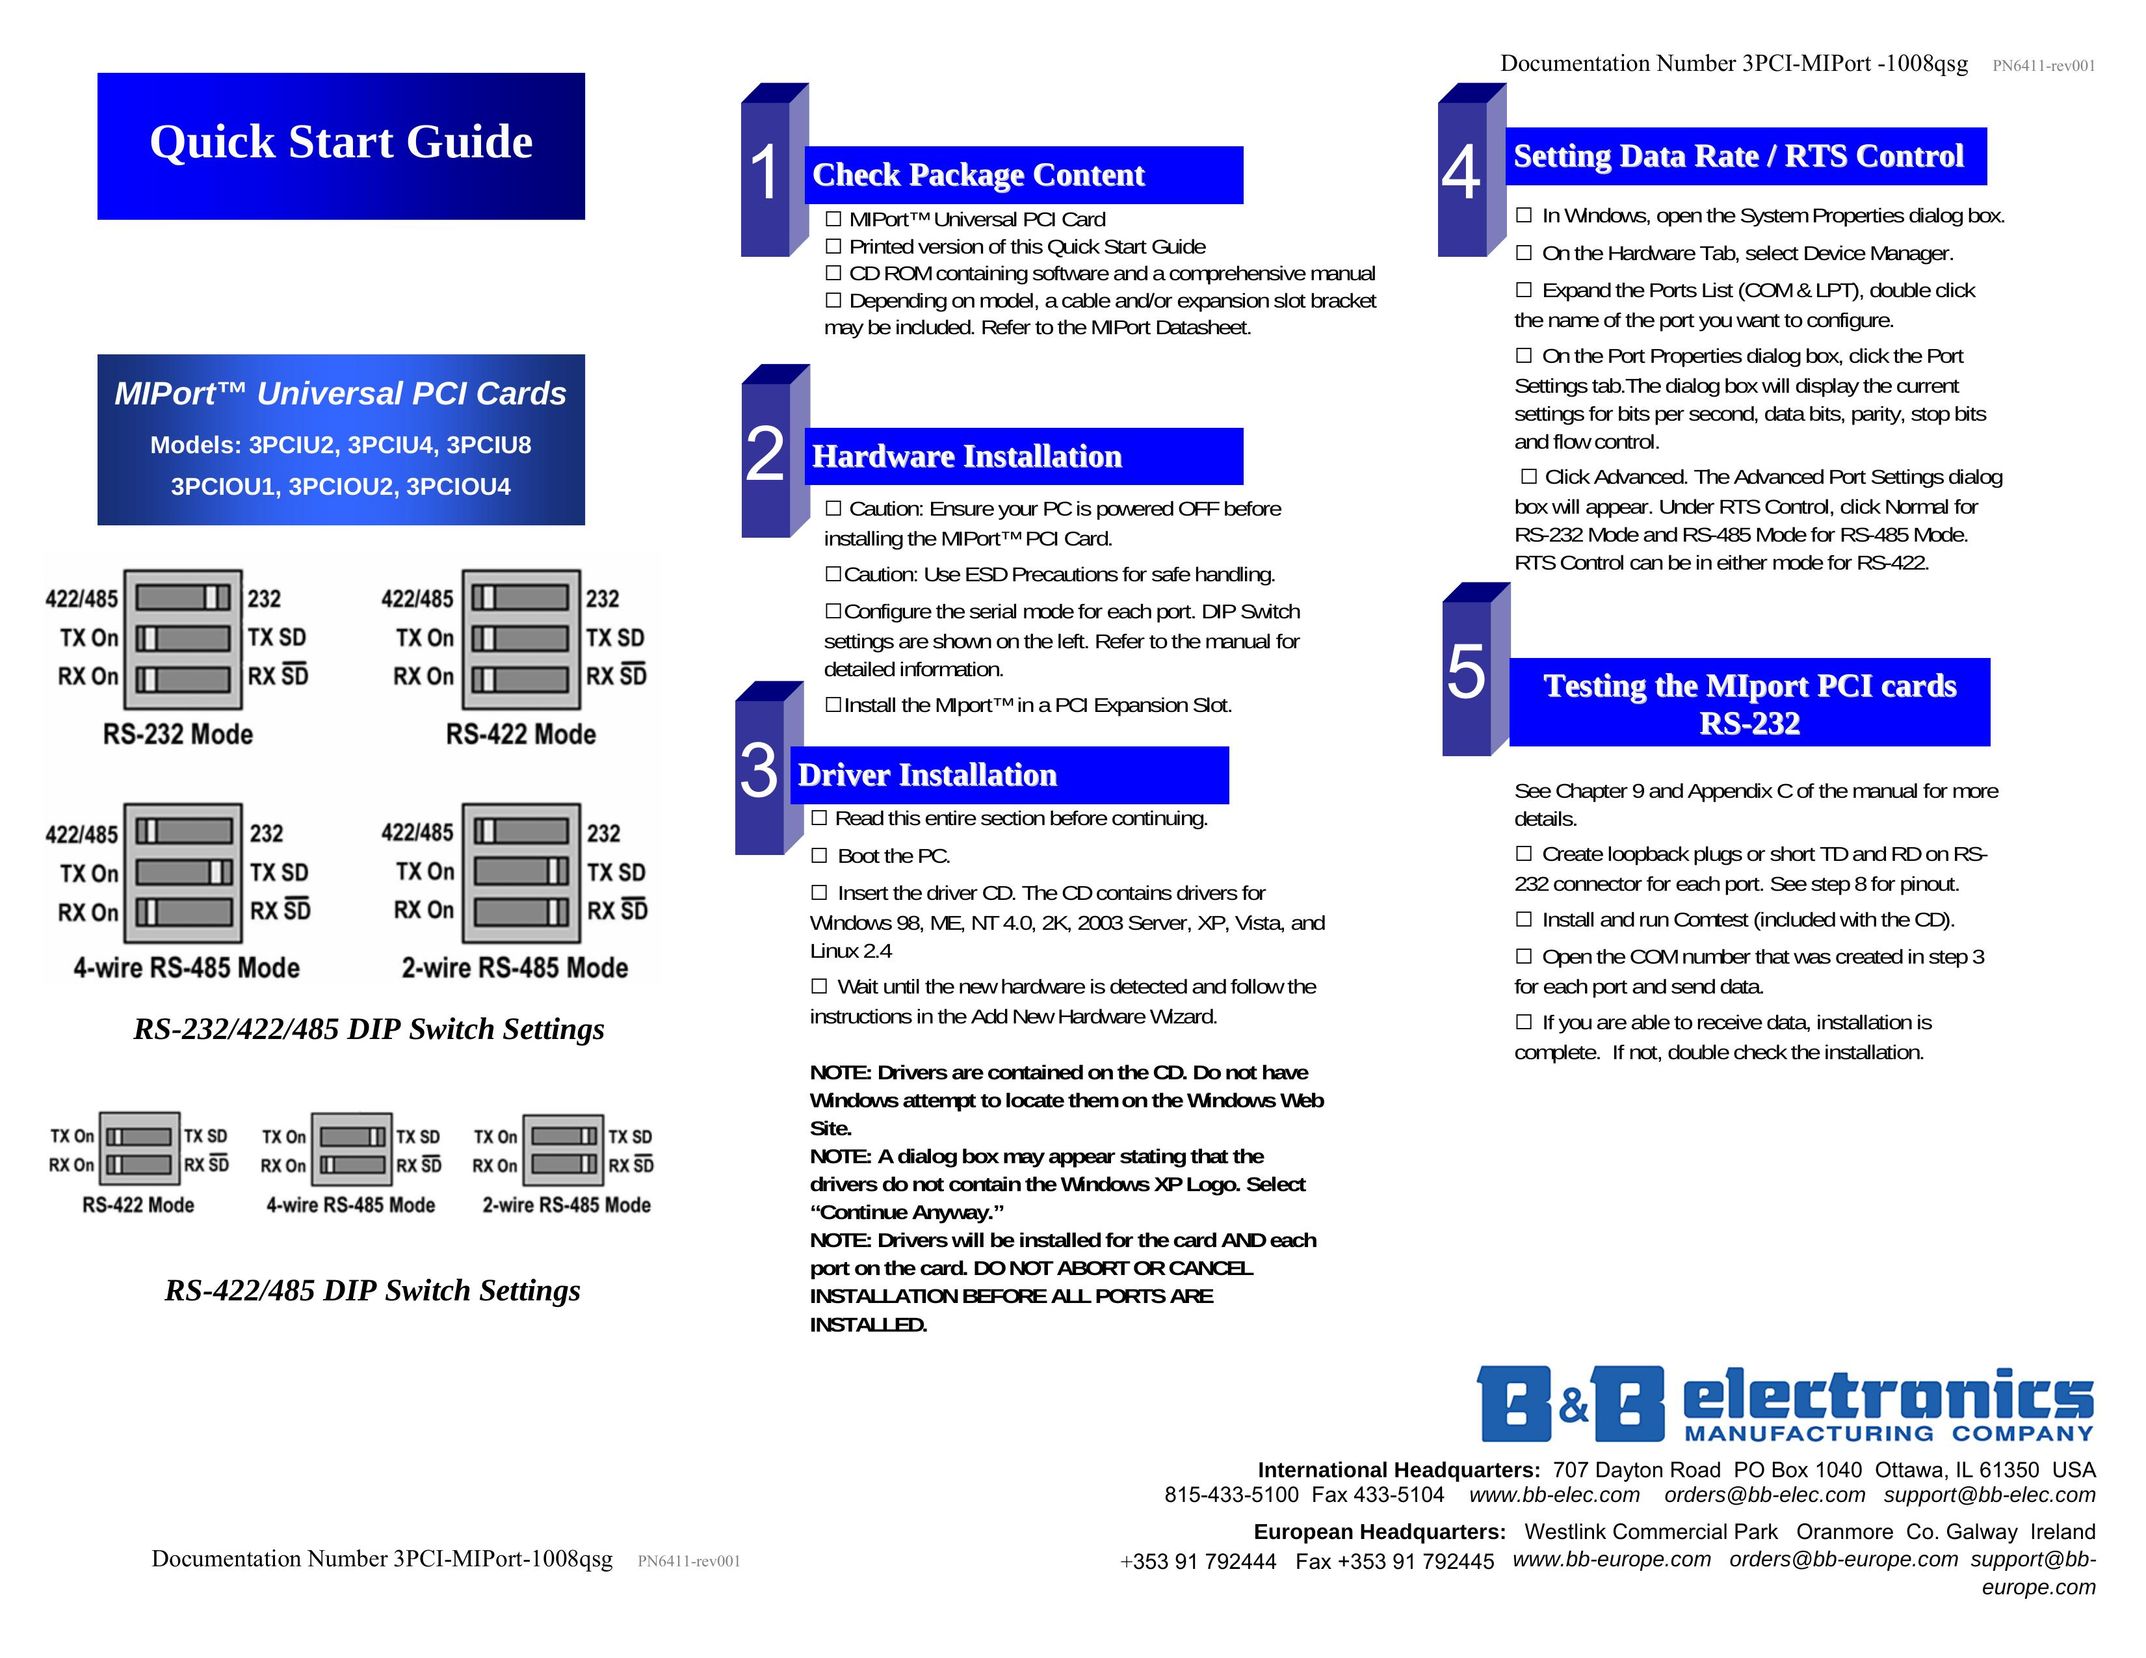 B&B Electronics 3PCIOU1 Network Card User Manual